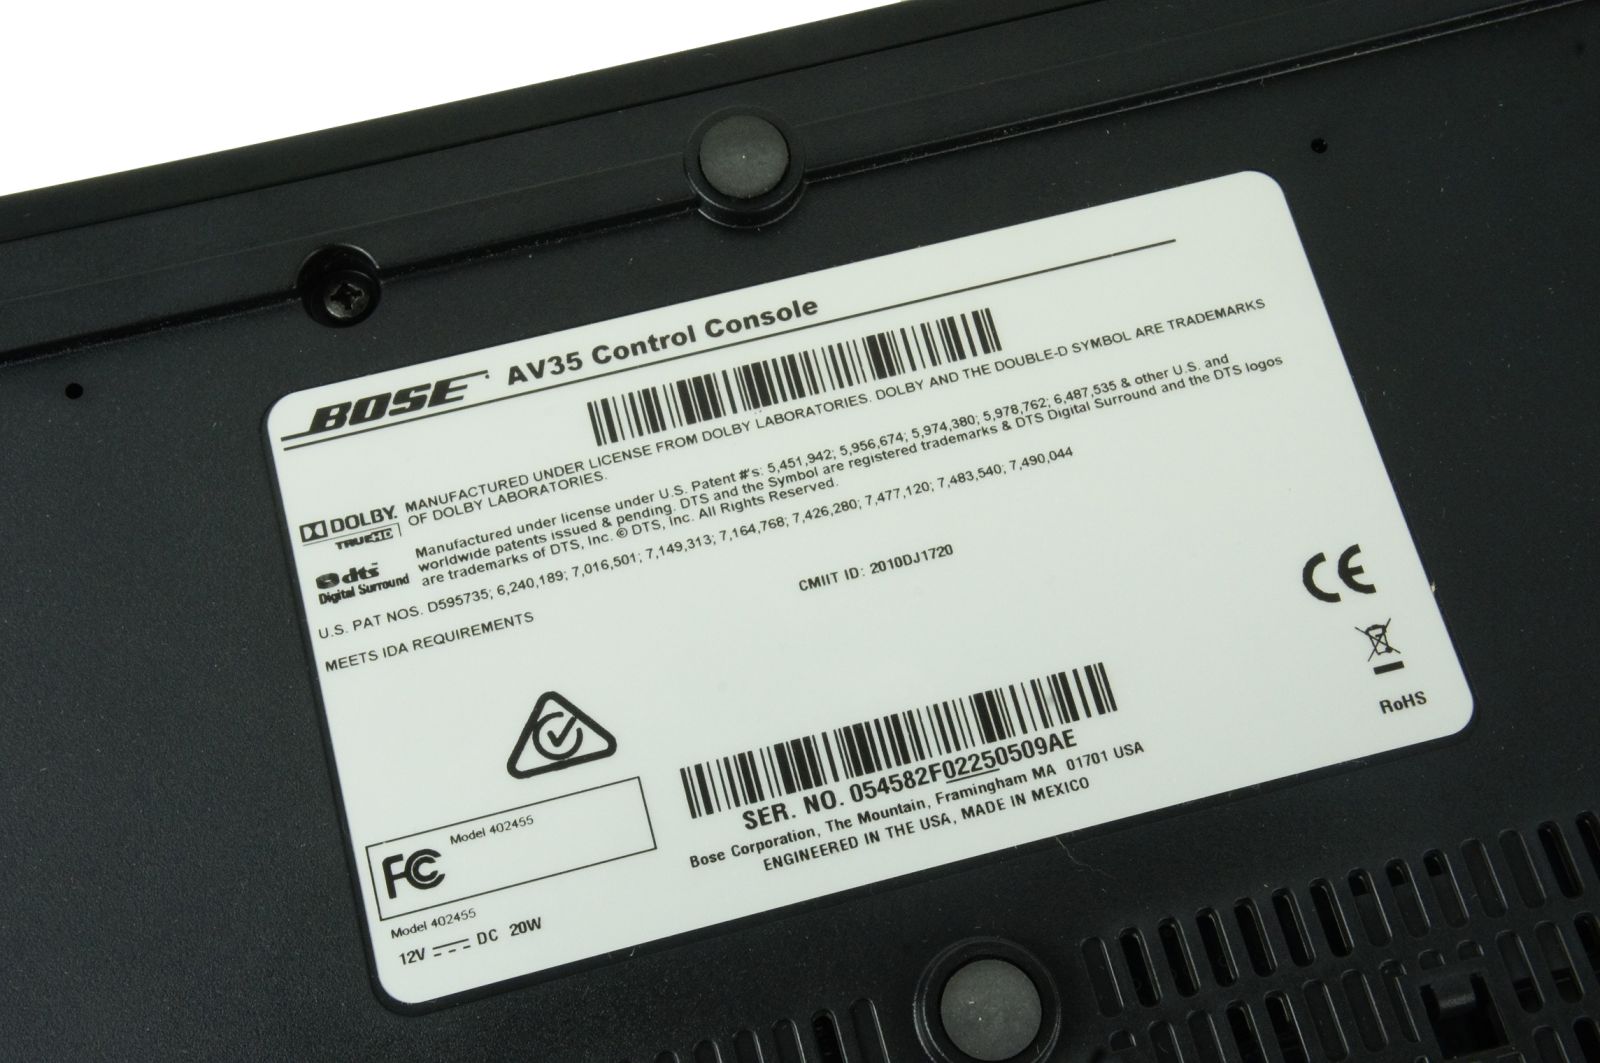 Bose_Lifestyle_AV-35_HDMI_5.1_Control_Console_Receiver_High-End_07